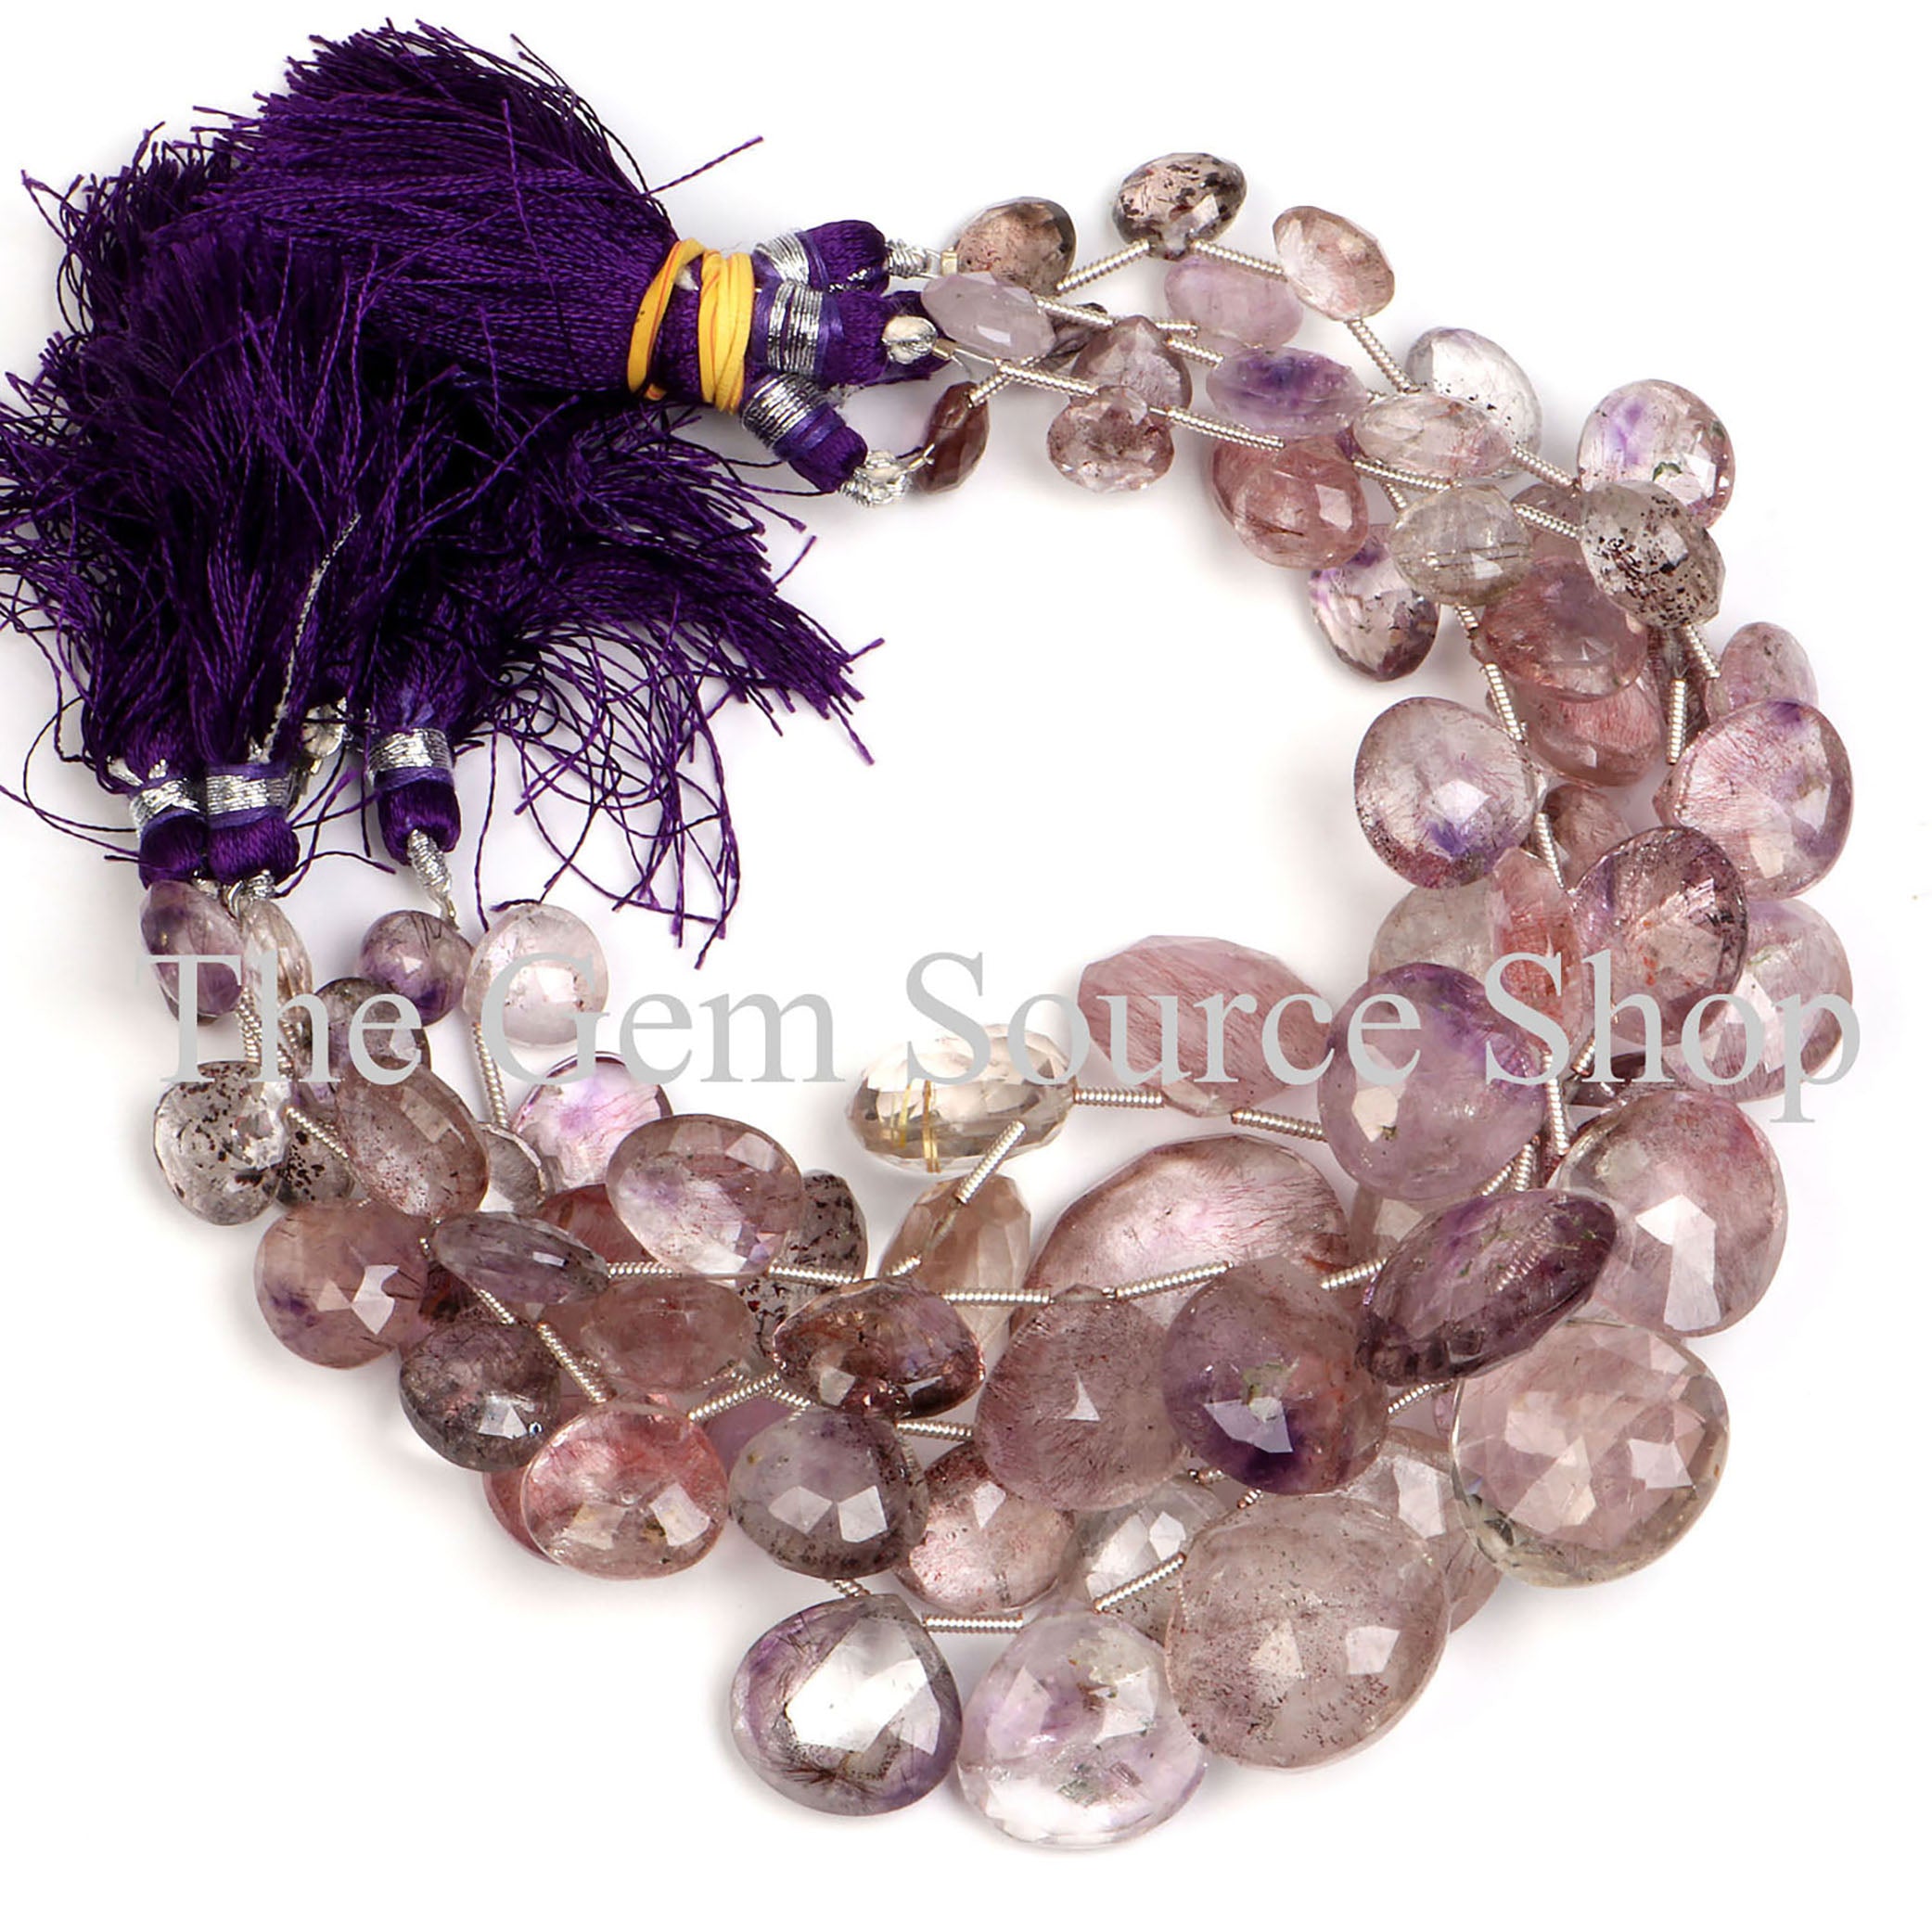 Small Size Gemstone Beads